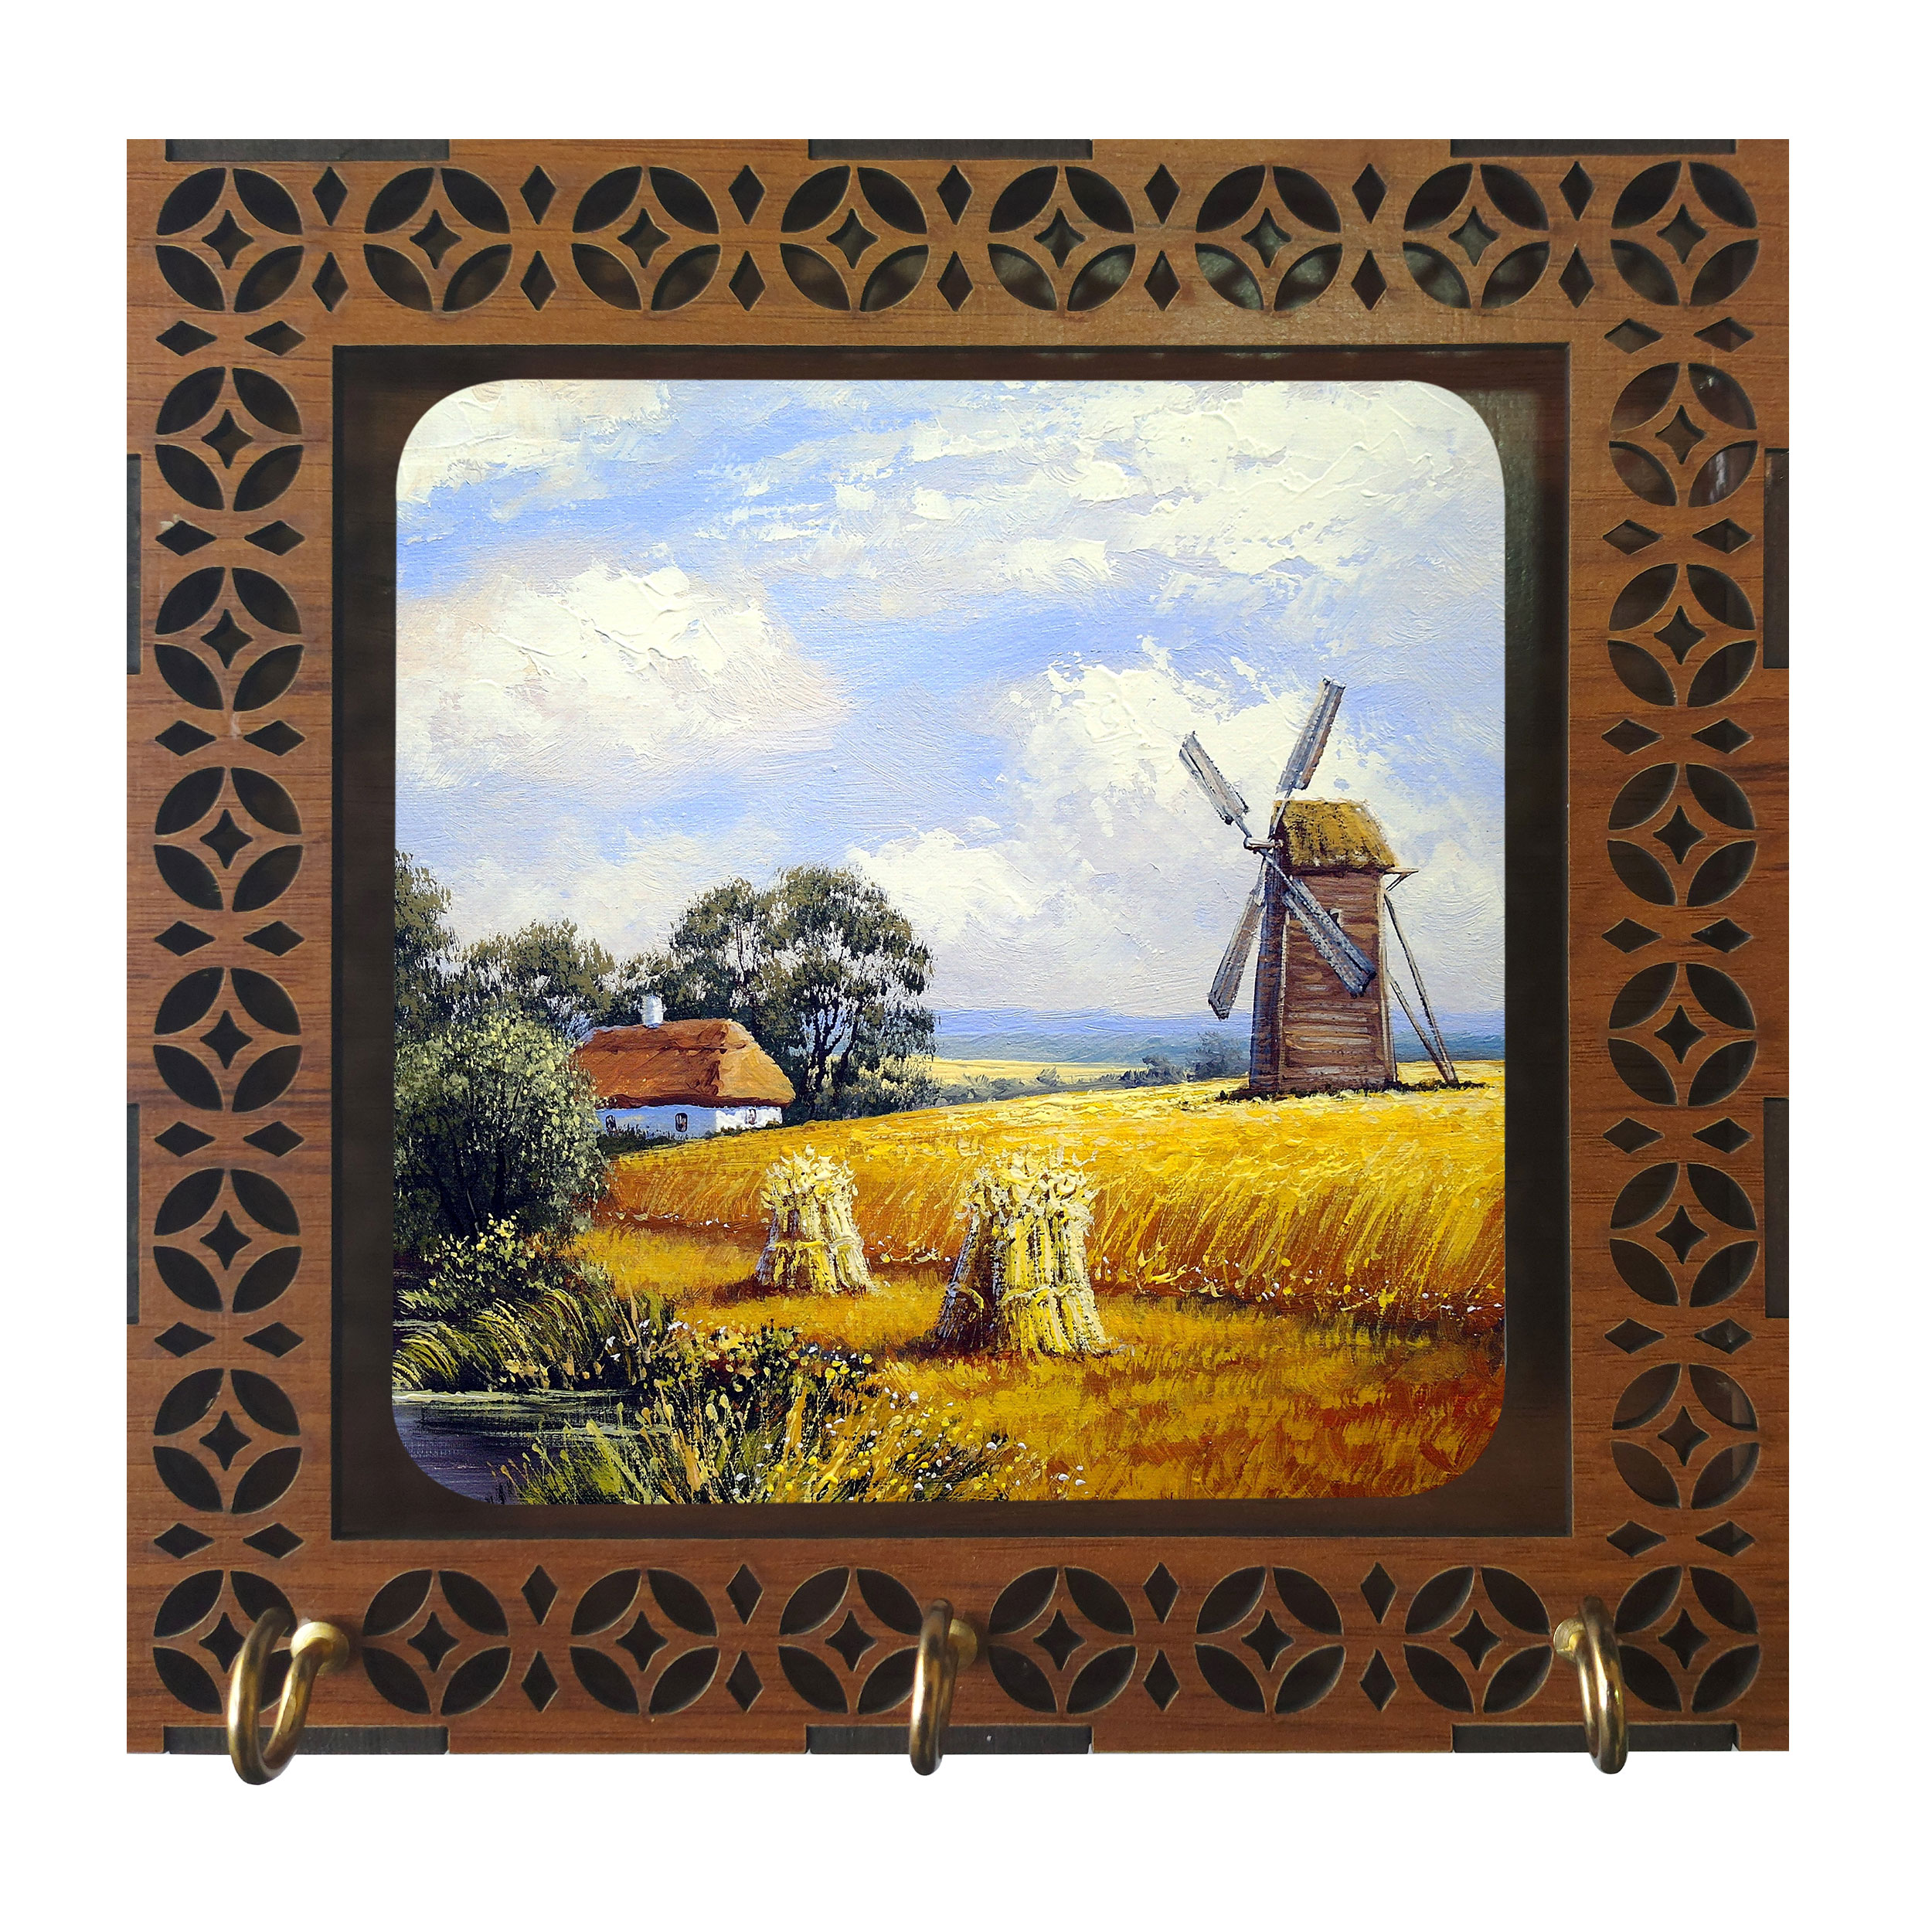 جا کلیدی مدل D1020 طرح نقاشی منظره مزرعه و آسیاب بادی و کلبه